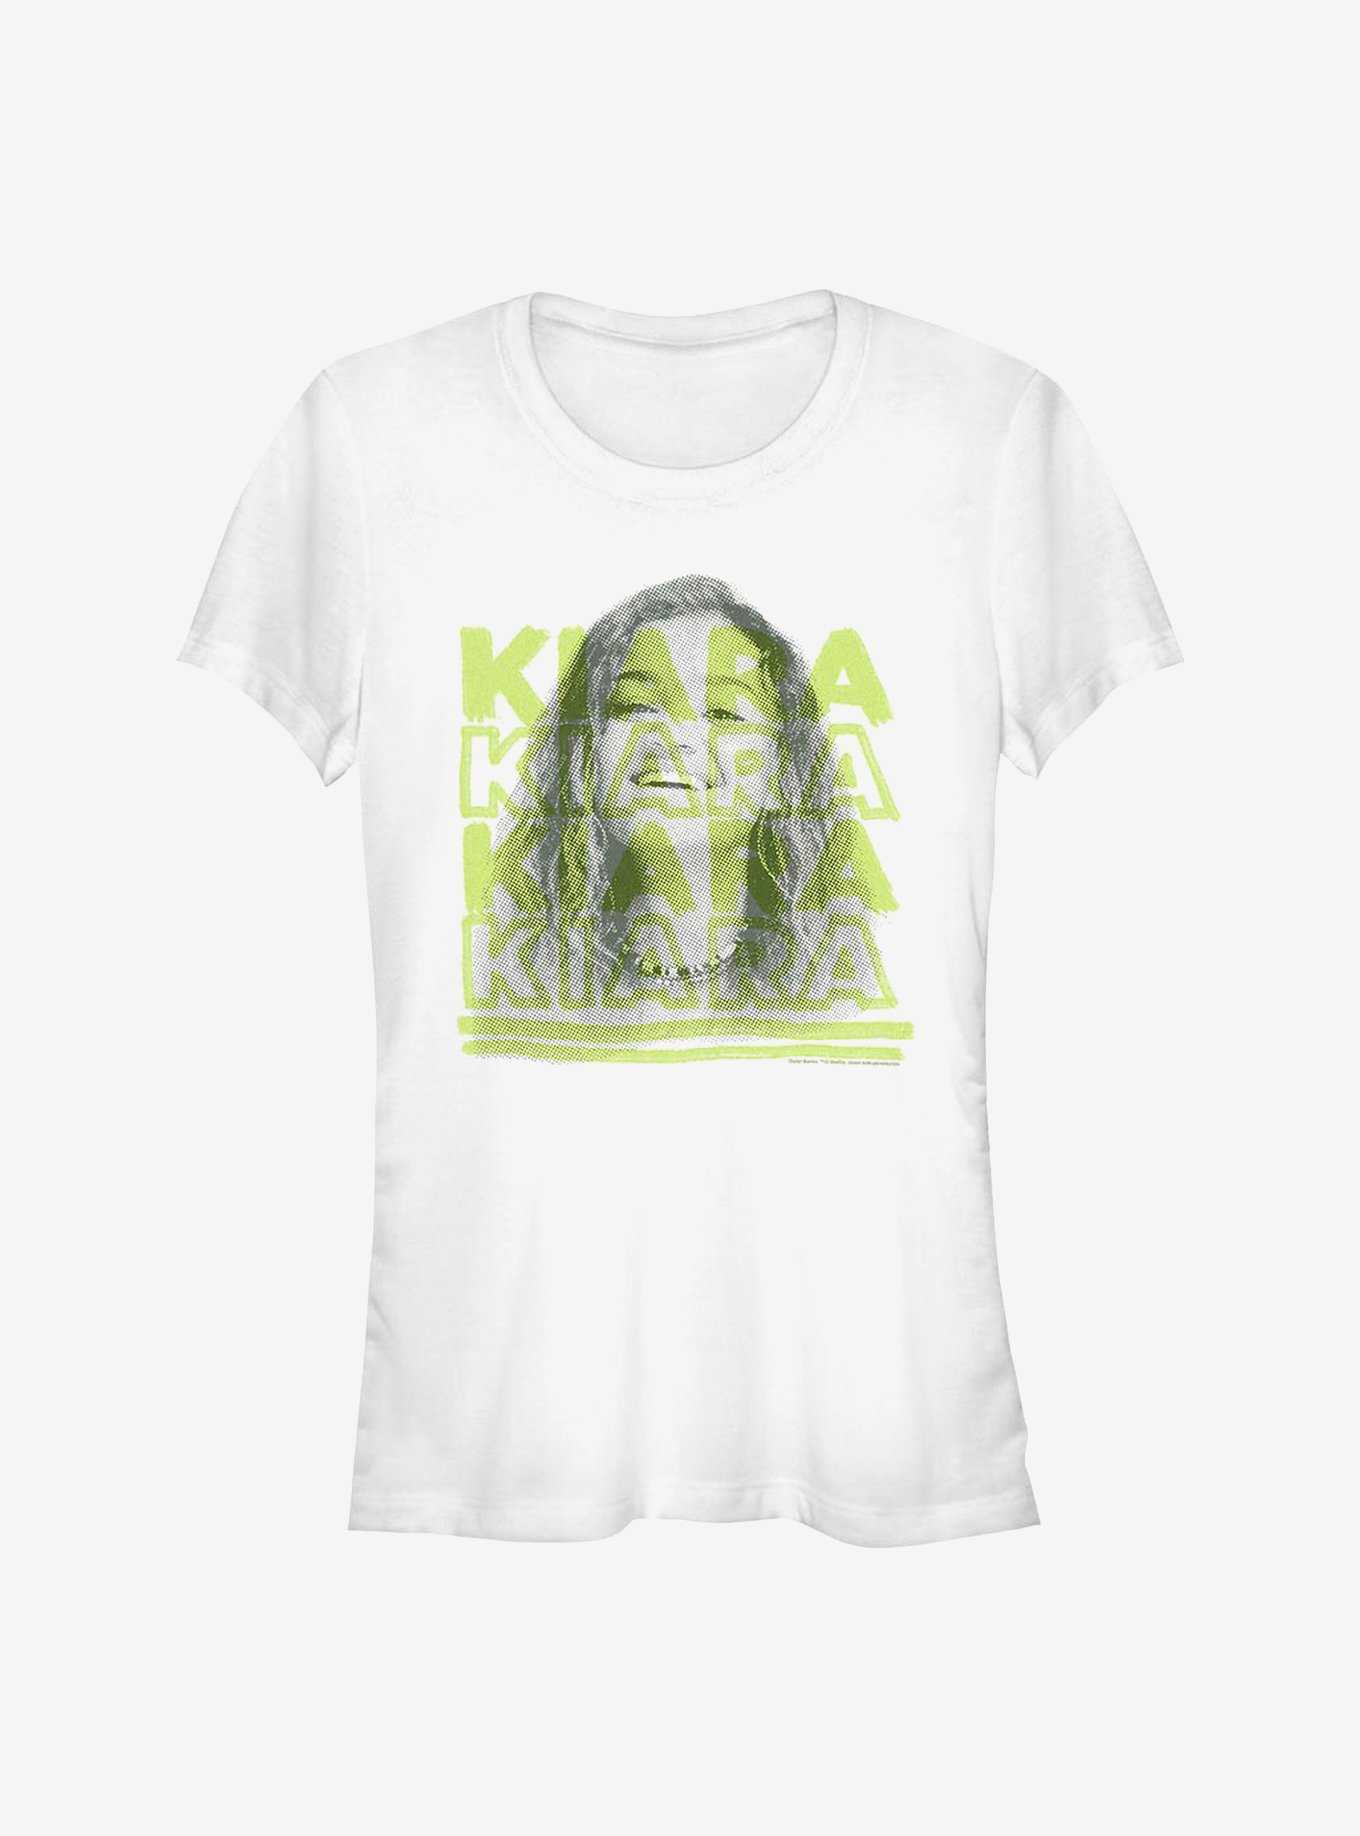 Outer Banks Kiara Portrait Girls T-Shirt, , hi-res